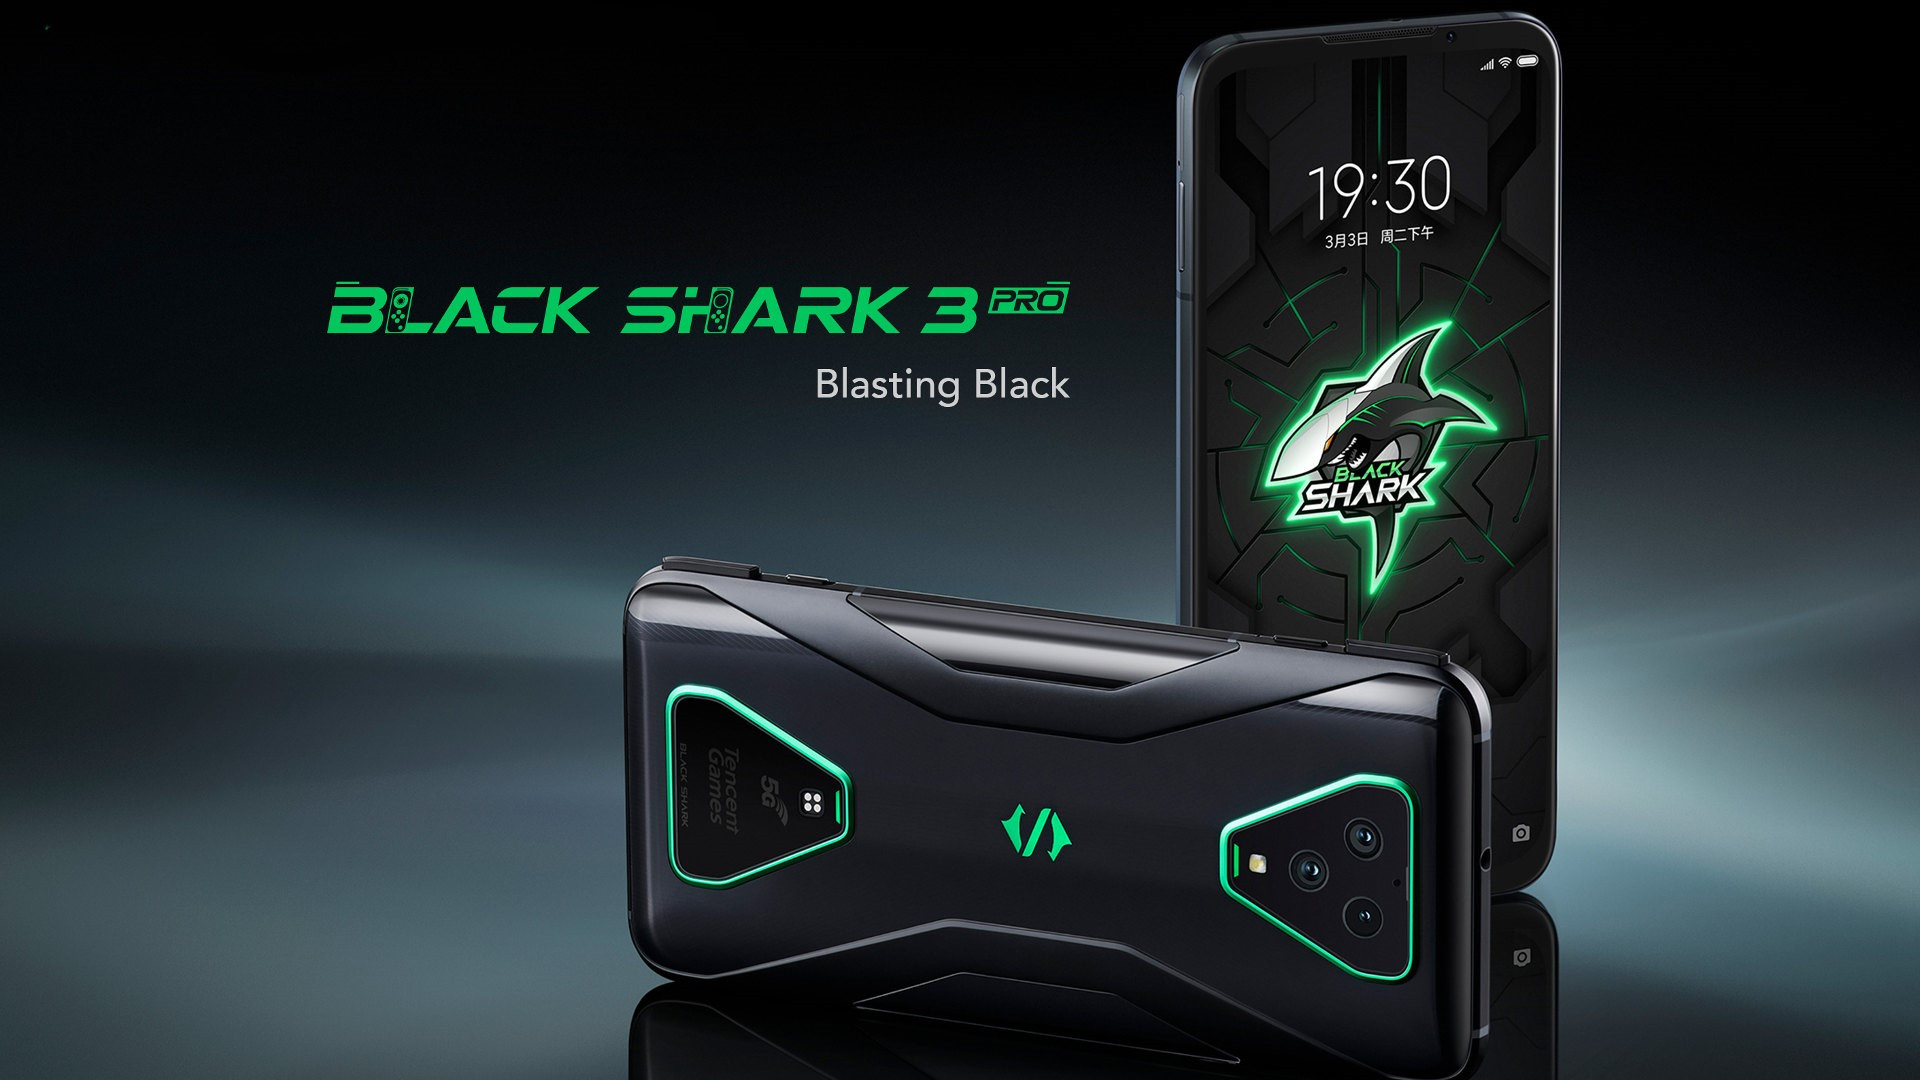 Xiaomi Black Shark Характеристики Цена